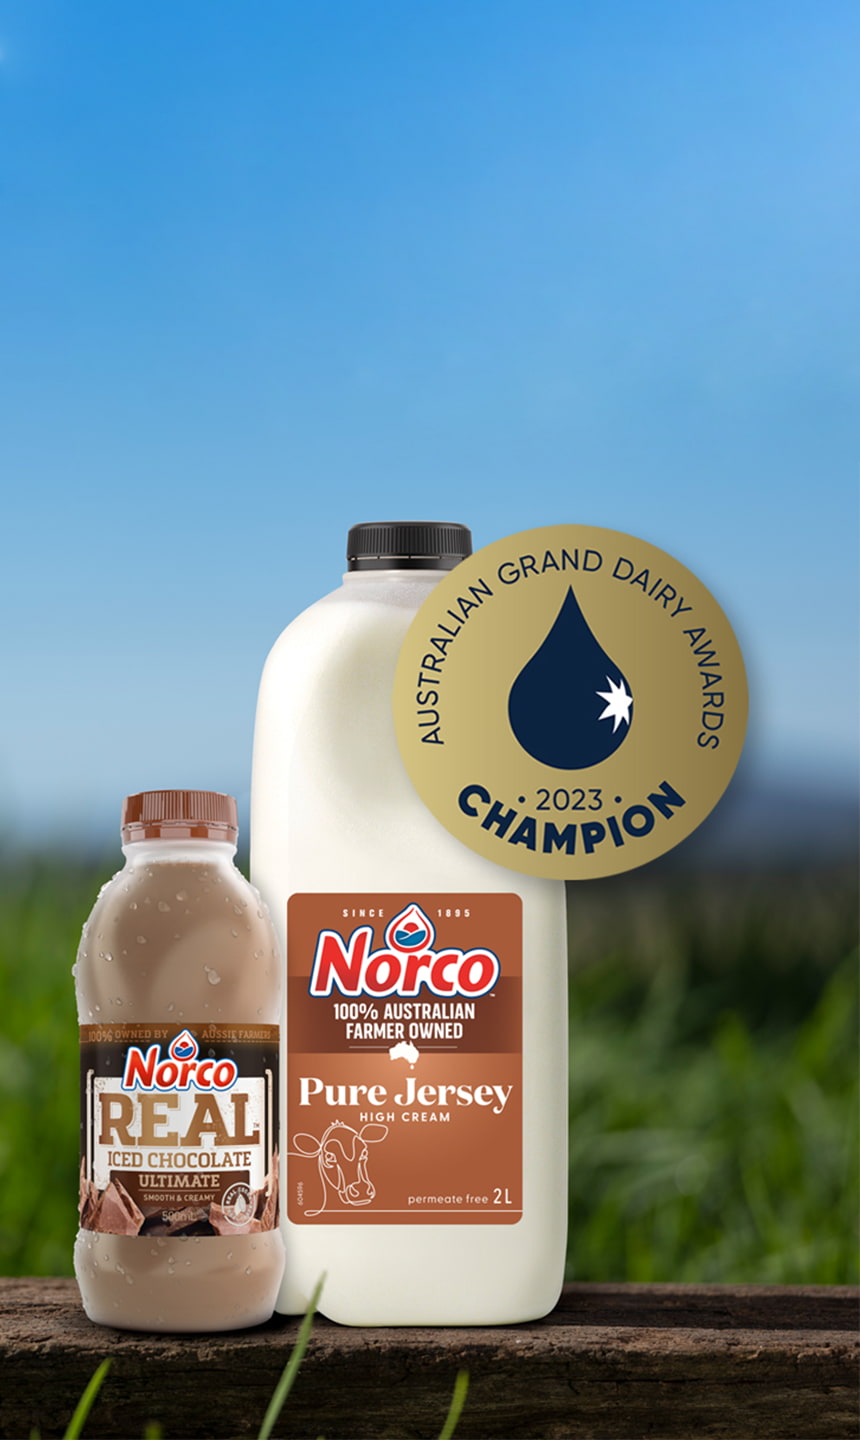 Norco 2023 champion